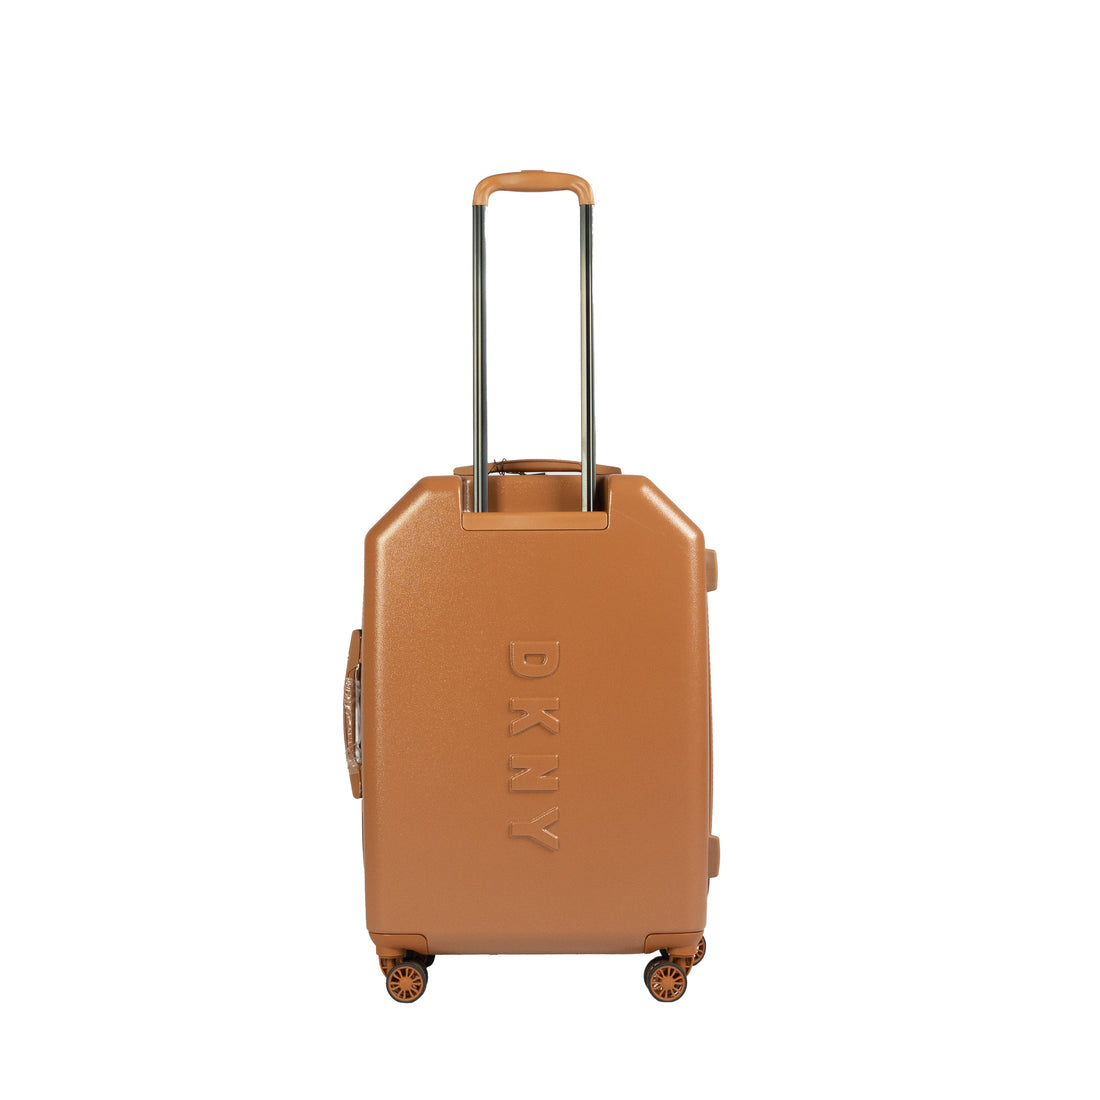 DKNY Orange Medium Luggage